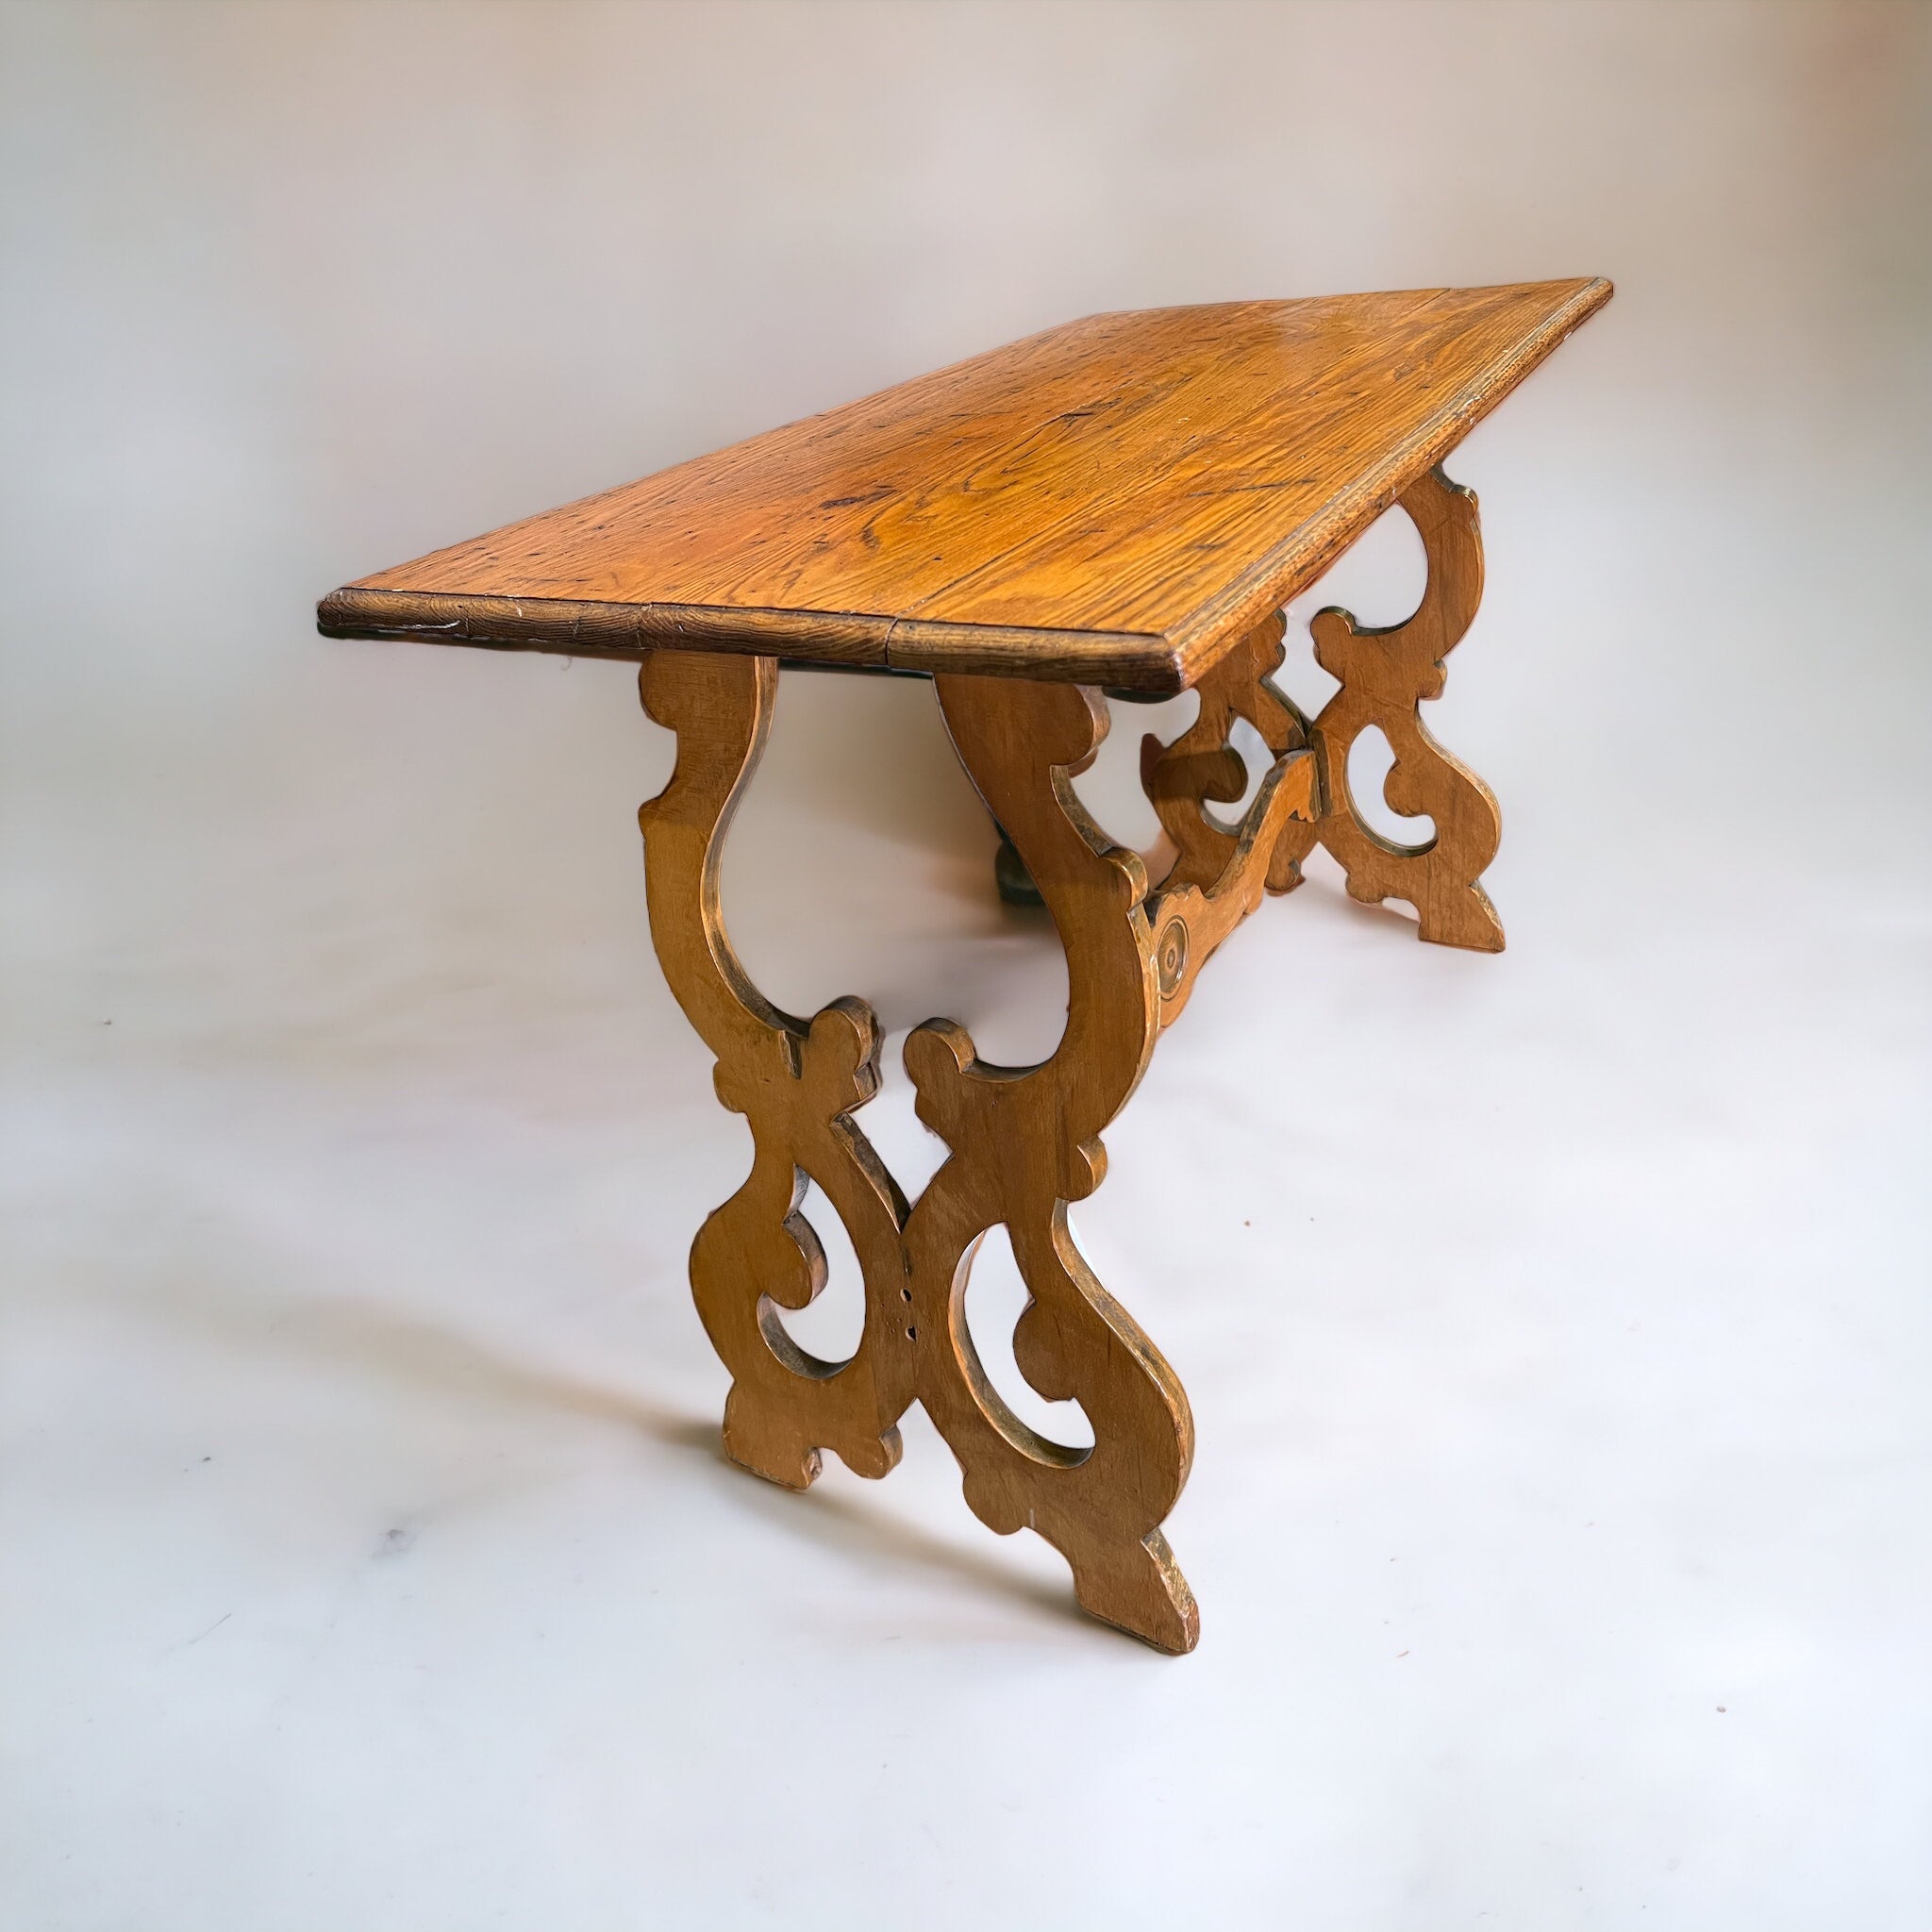 Wooden Spanish Antique Wood Trestle Table (Vintage)